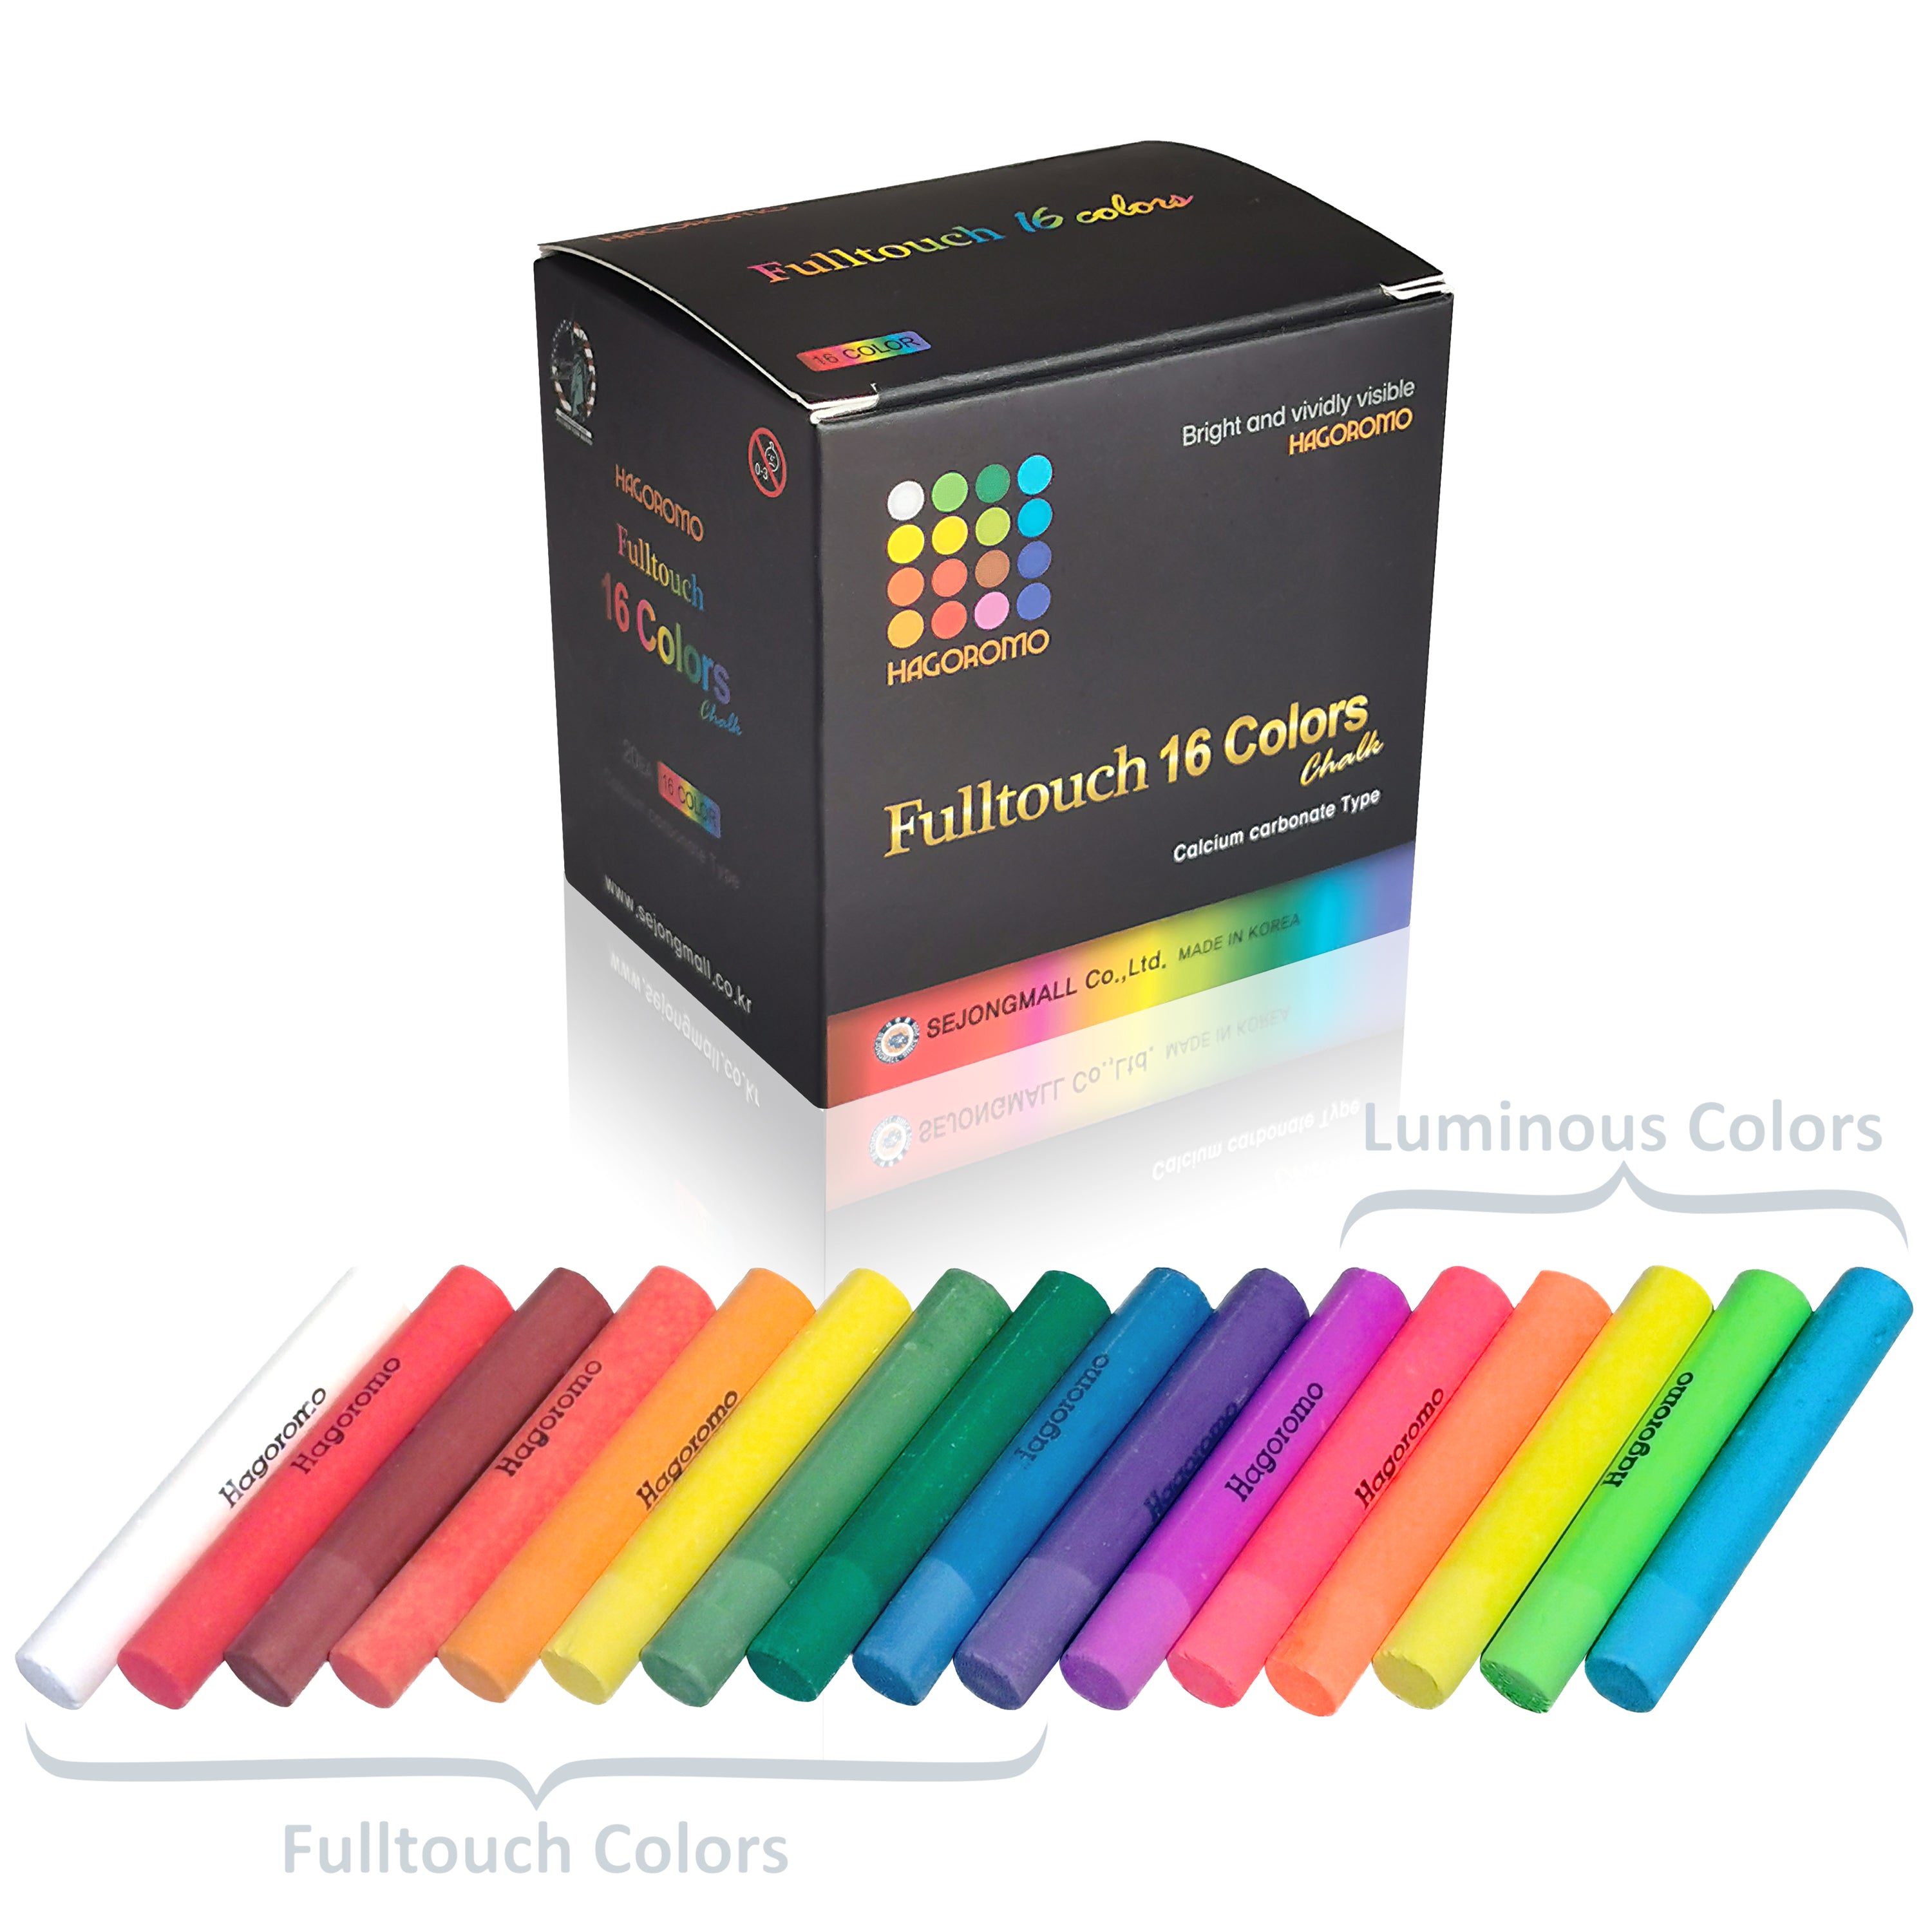 HAGOROMO Fulltouch x Luminous Chalk 10+6 Colors 20 PCS [Limited Editio –